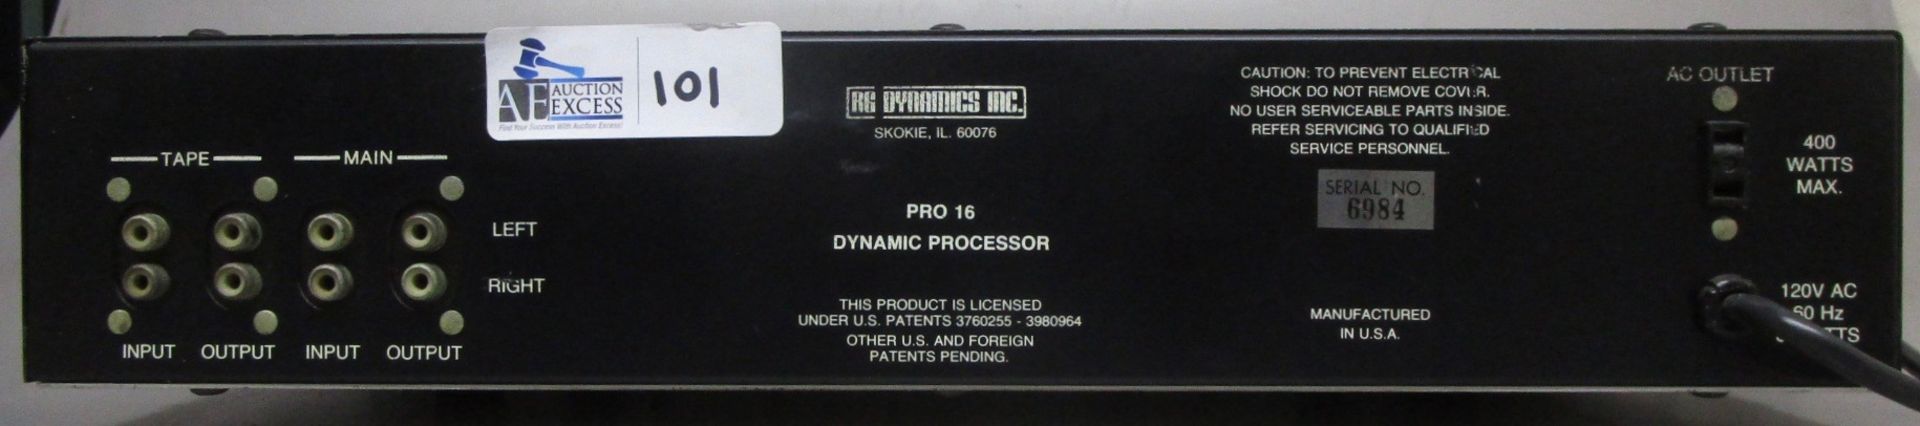 RG DYNAMIC PROCESSOR PRO16 - Image 2 of 2